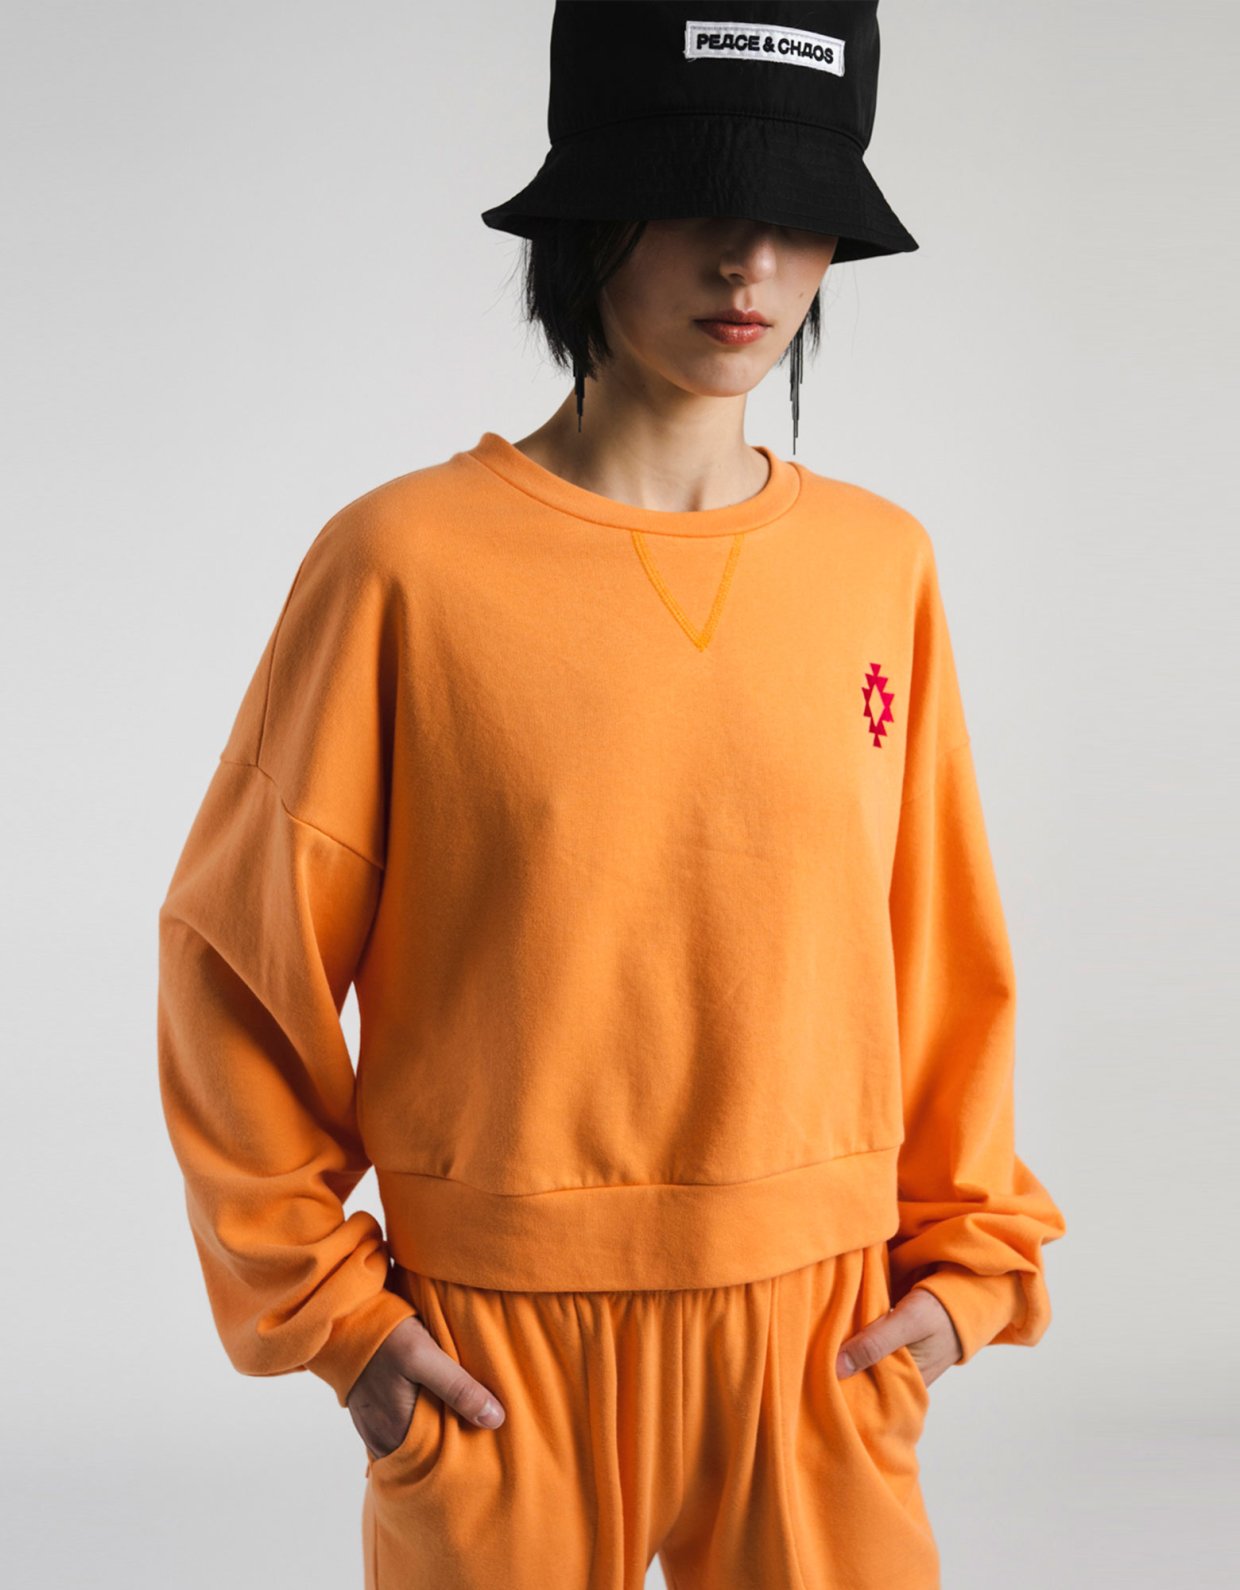 Peace & Chaos Tangerine sweatshirt